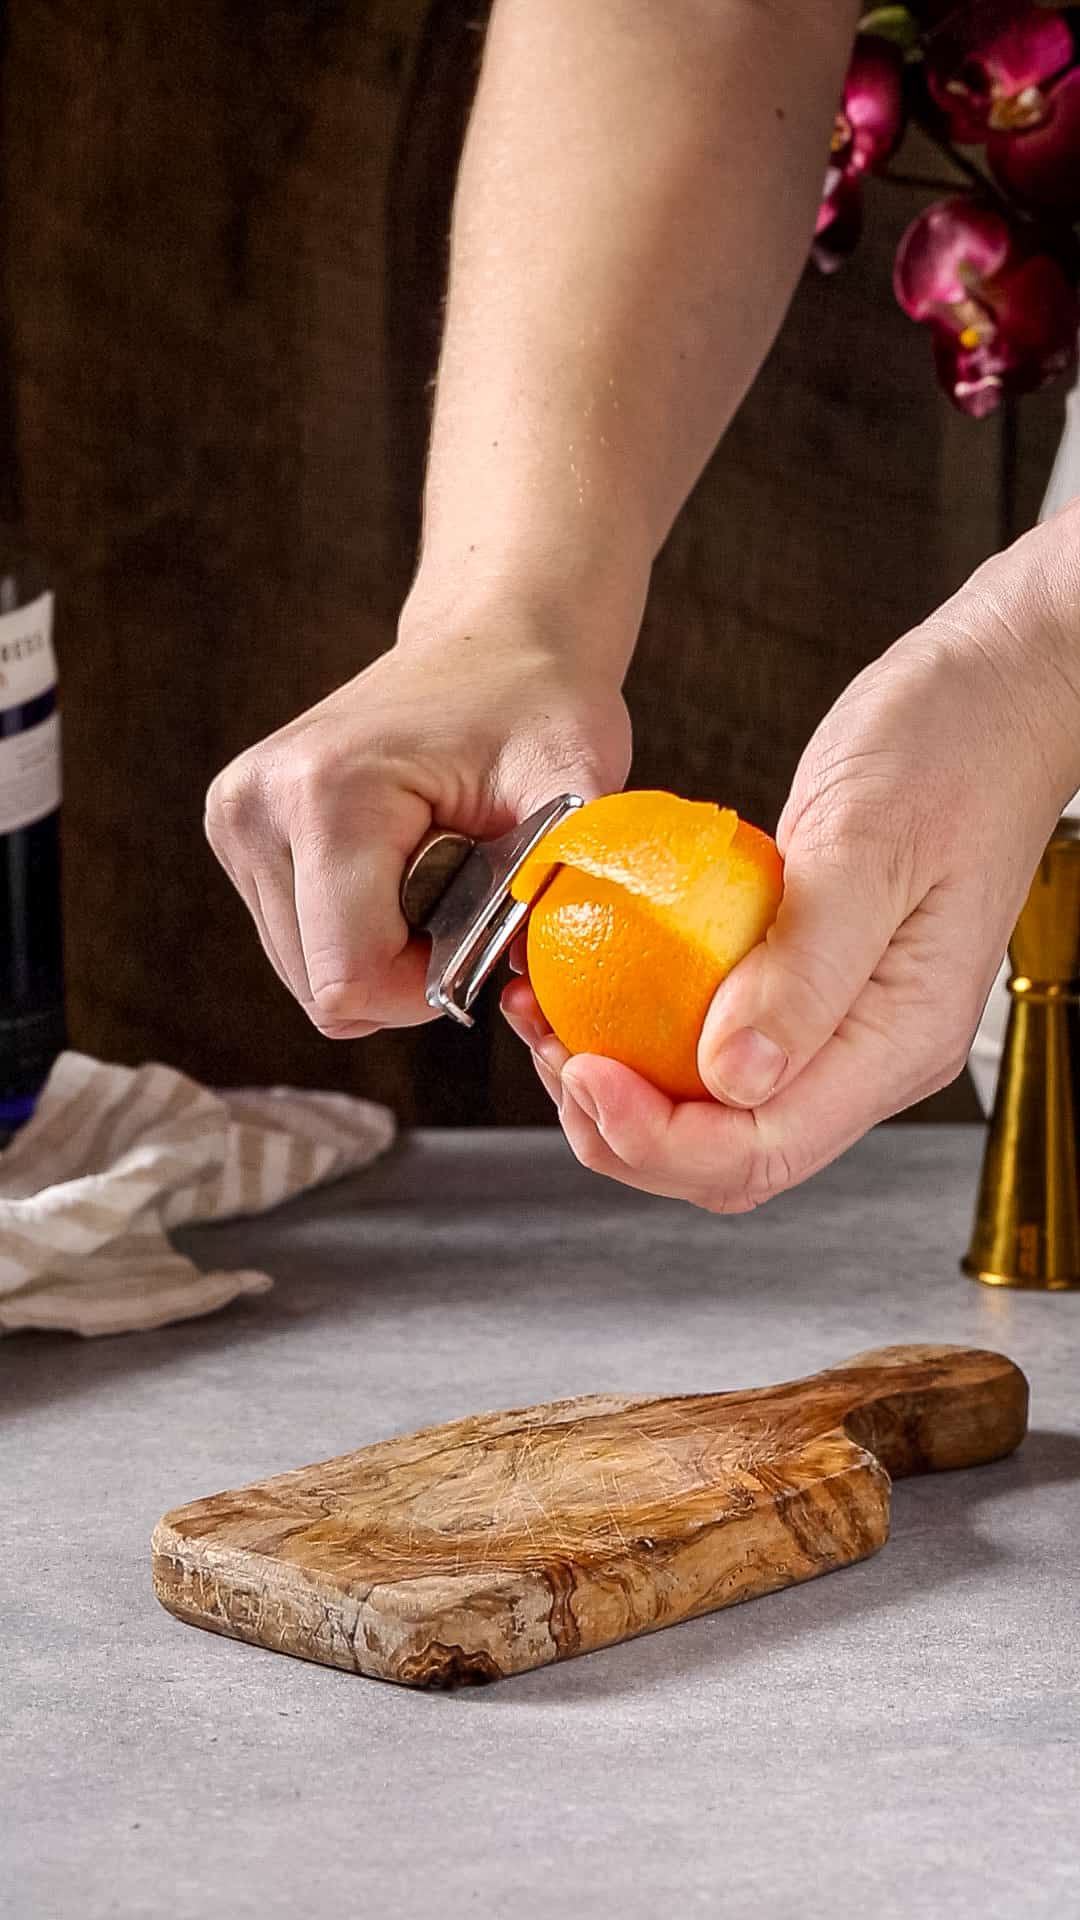 Peeling a large orange with a fruit peeler.